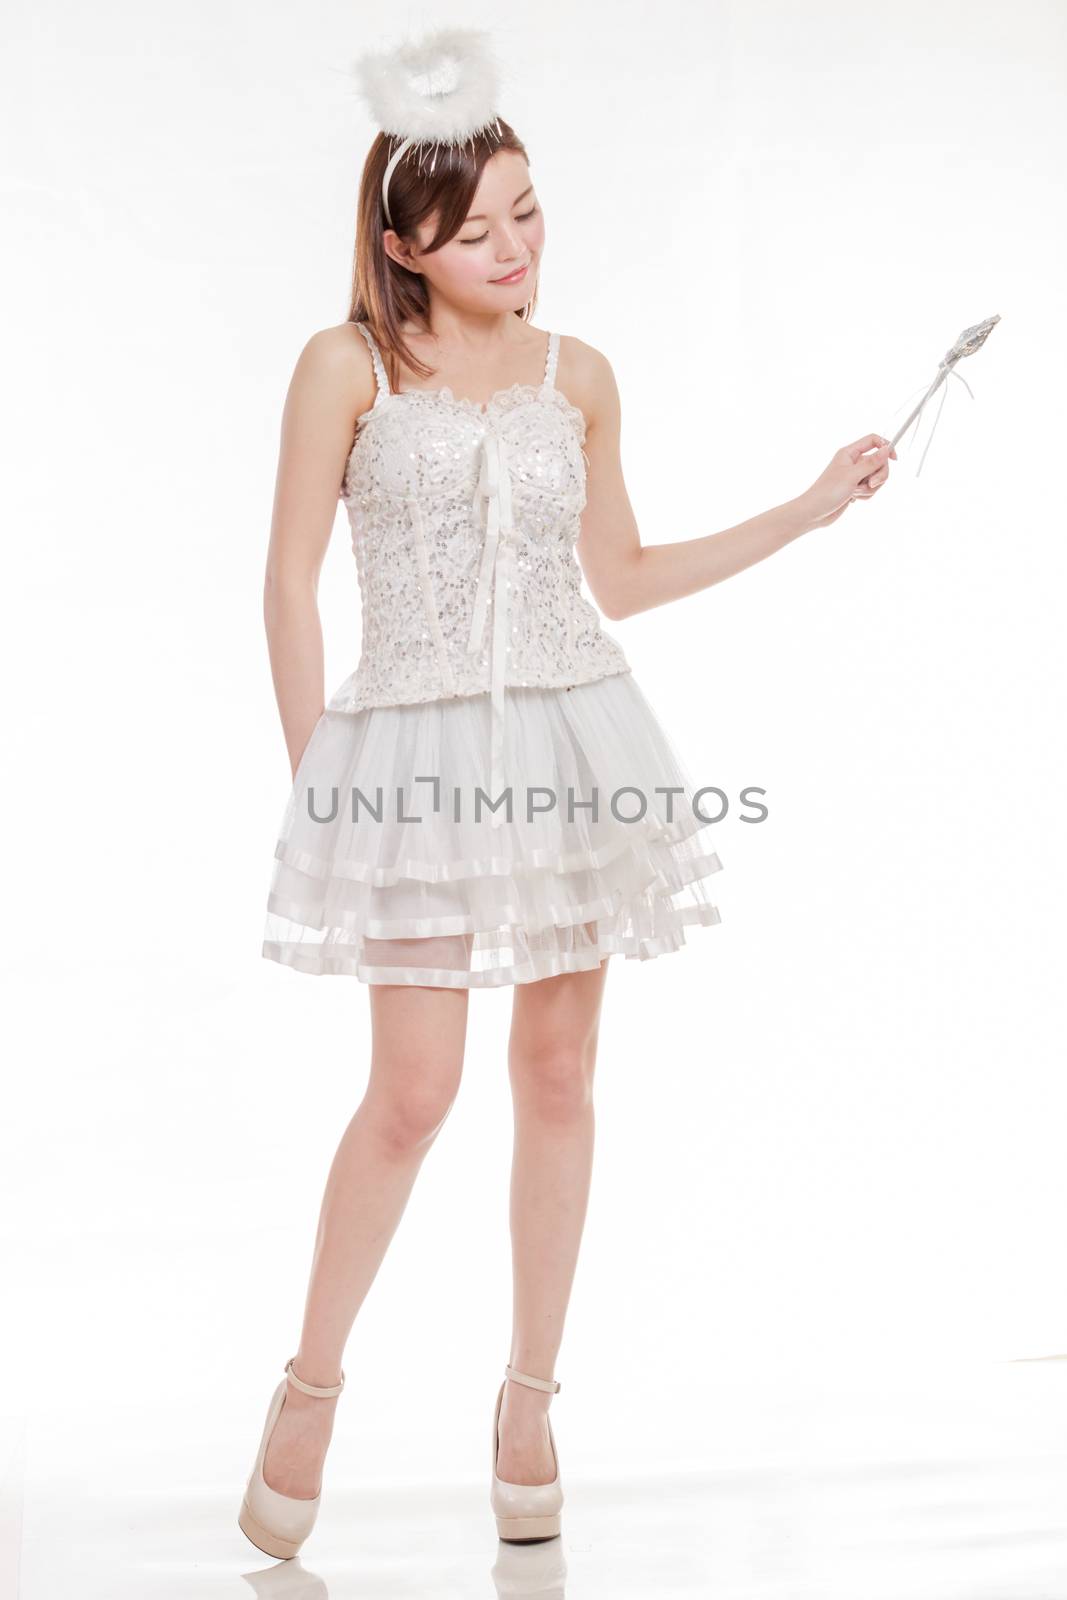 Chinese woman in white angel fairy costume waving her wand